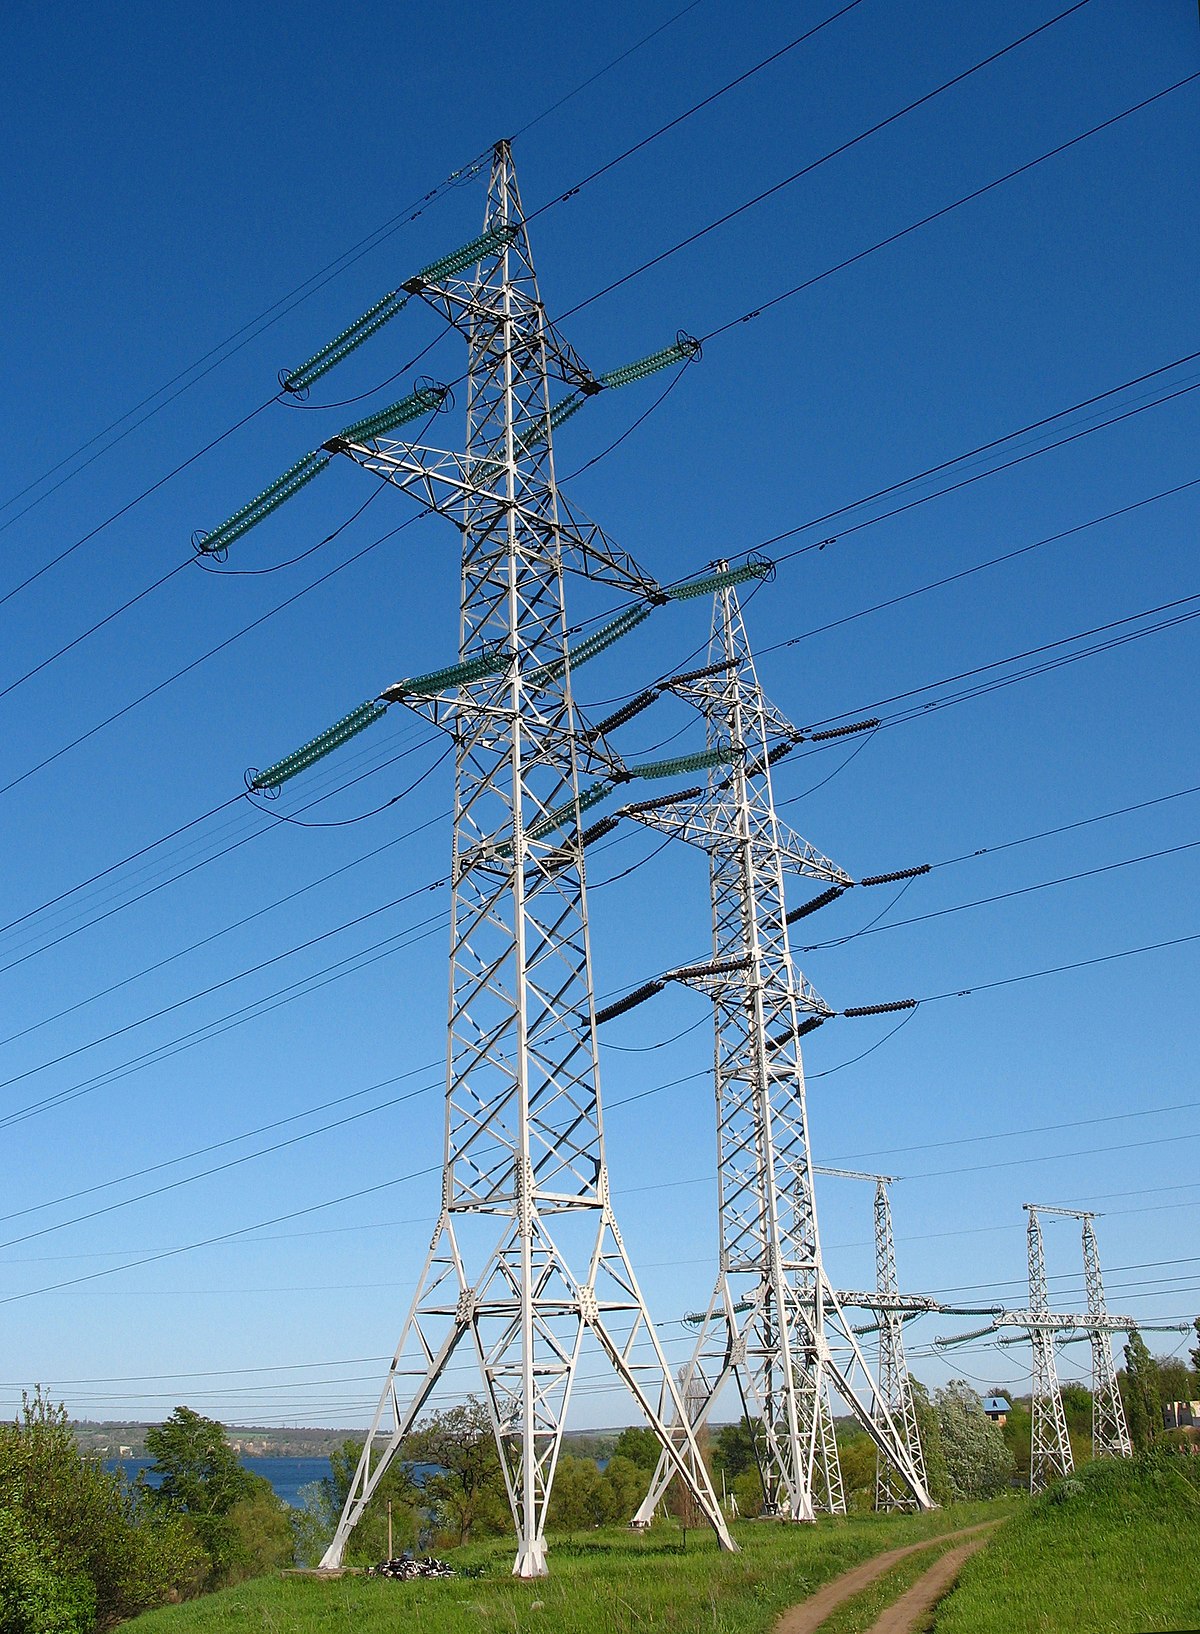 File:Overhead power lines in Dnipro, Ukraine.jpg - Wikimedia Commons